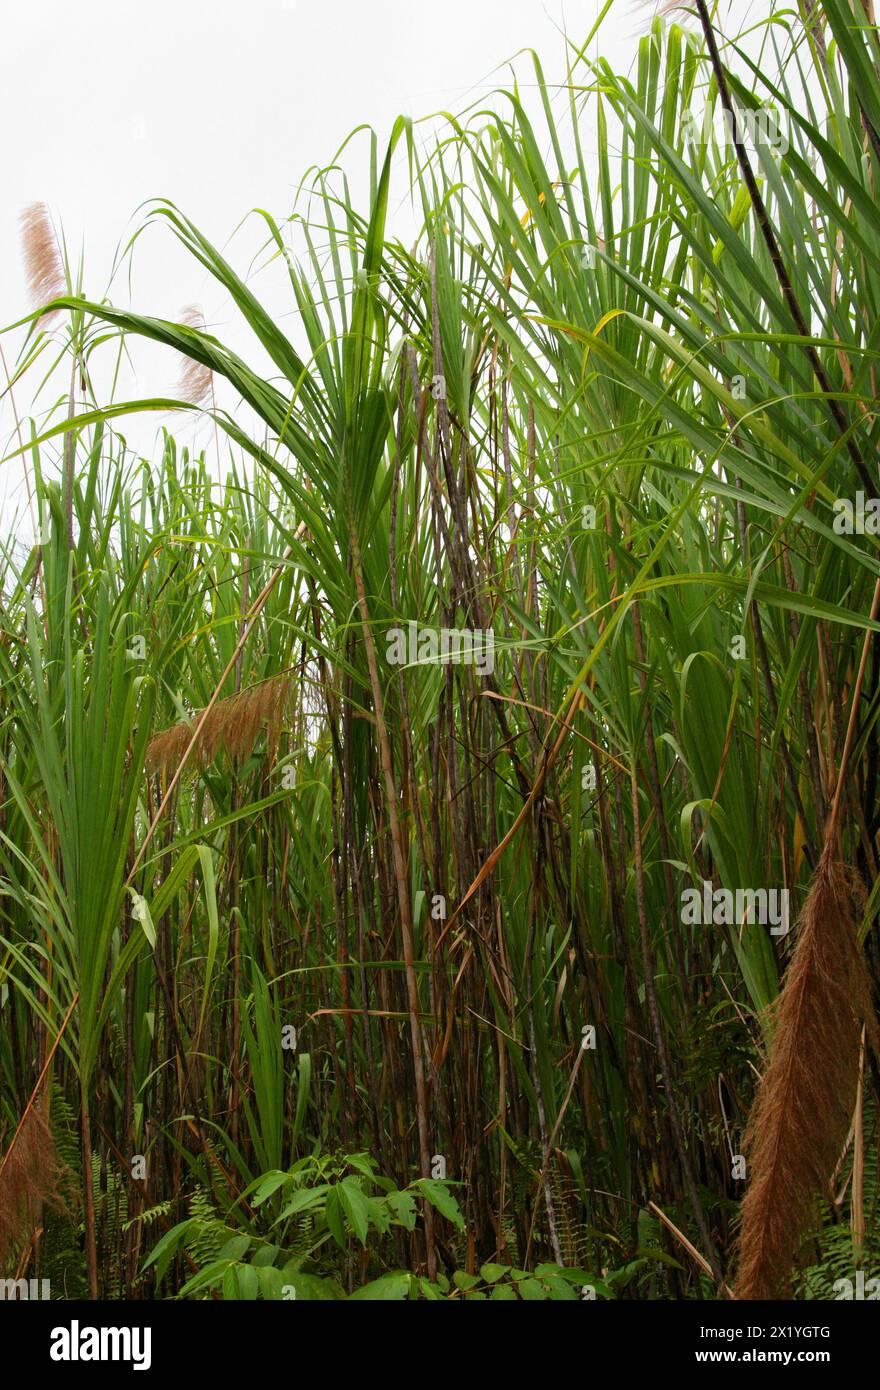 Wildstock oder Wildstock, Gynerium sagittatum, Arundineae, Arundinoideae, Poaceae. Arenal Vulcano Nationalpark, Costa Rica. Hohes wildes Gras. Stockfoto